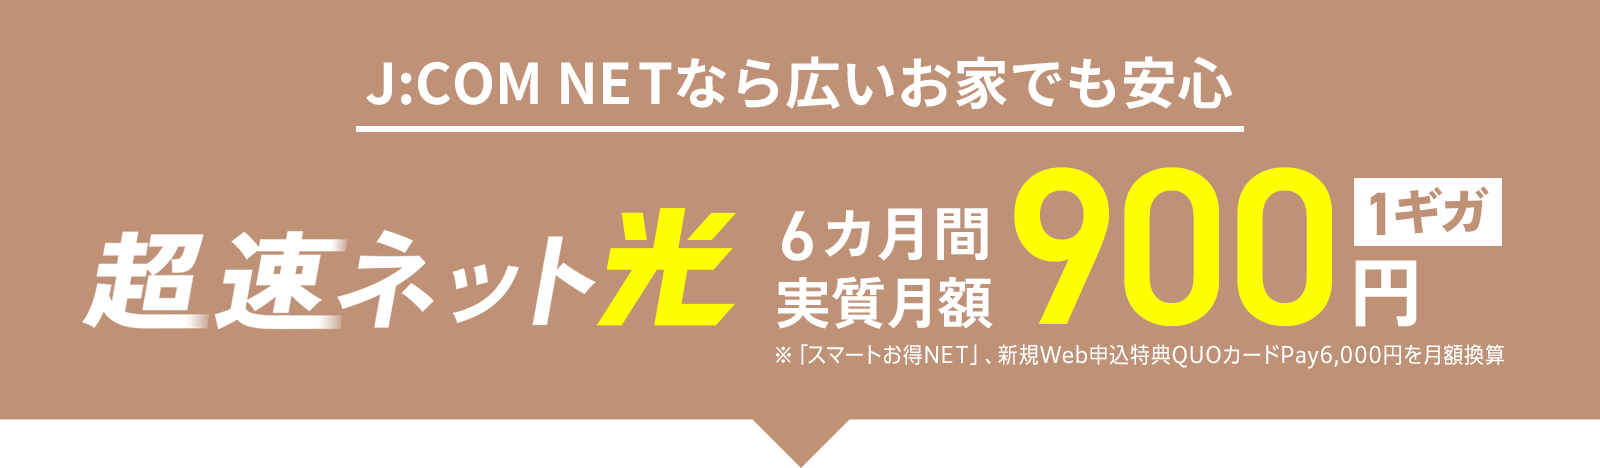 J:COM NETなら広いお家でも安心 超速ネット光 1ギガ 6カ月間実質月額900円